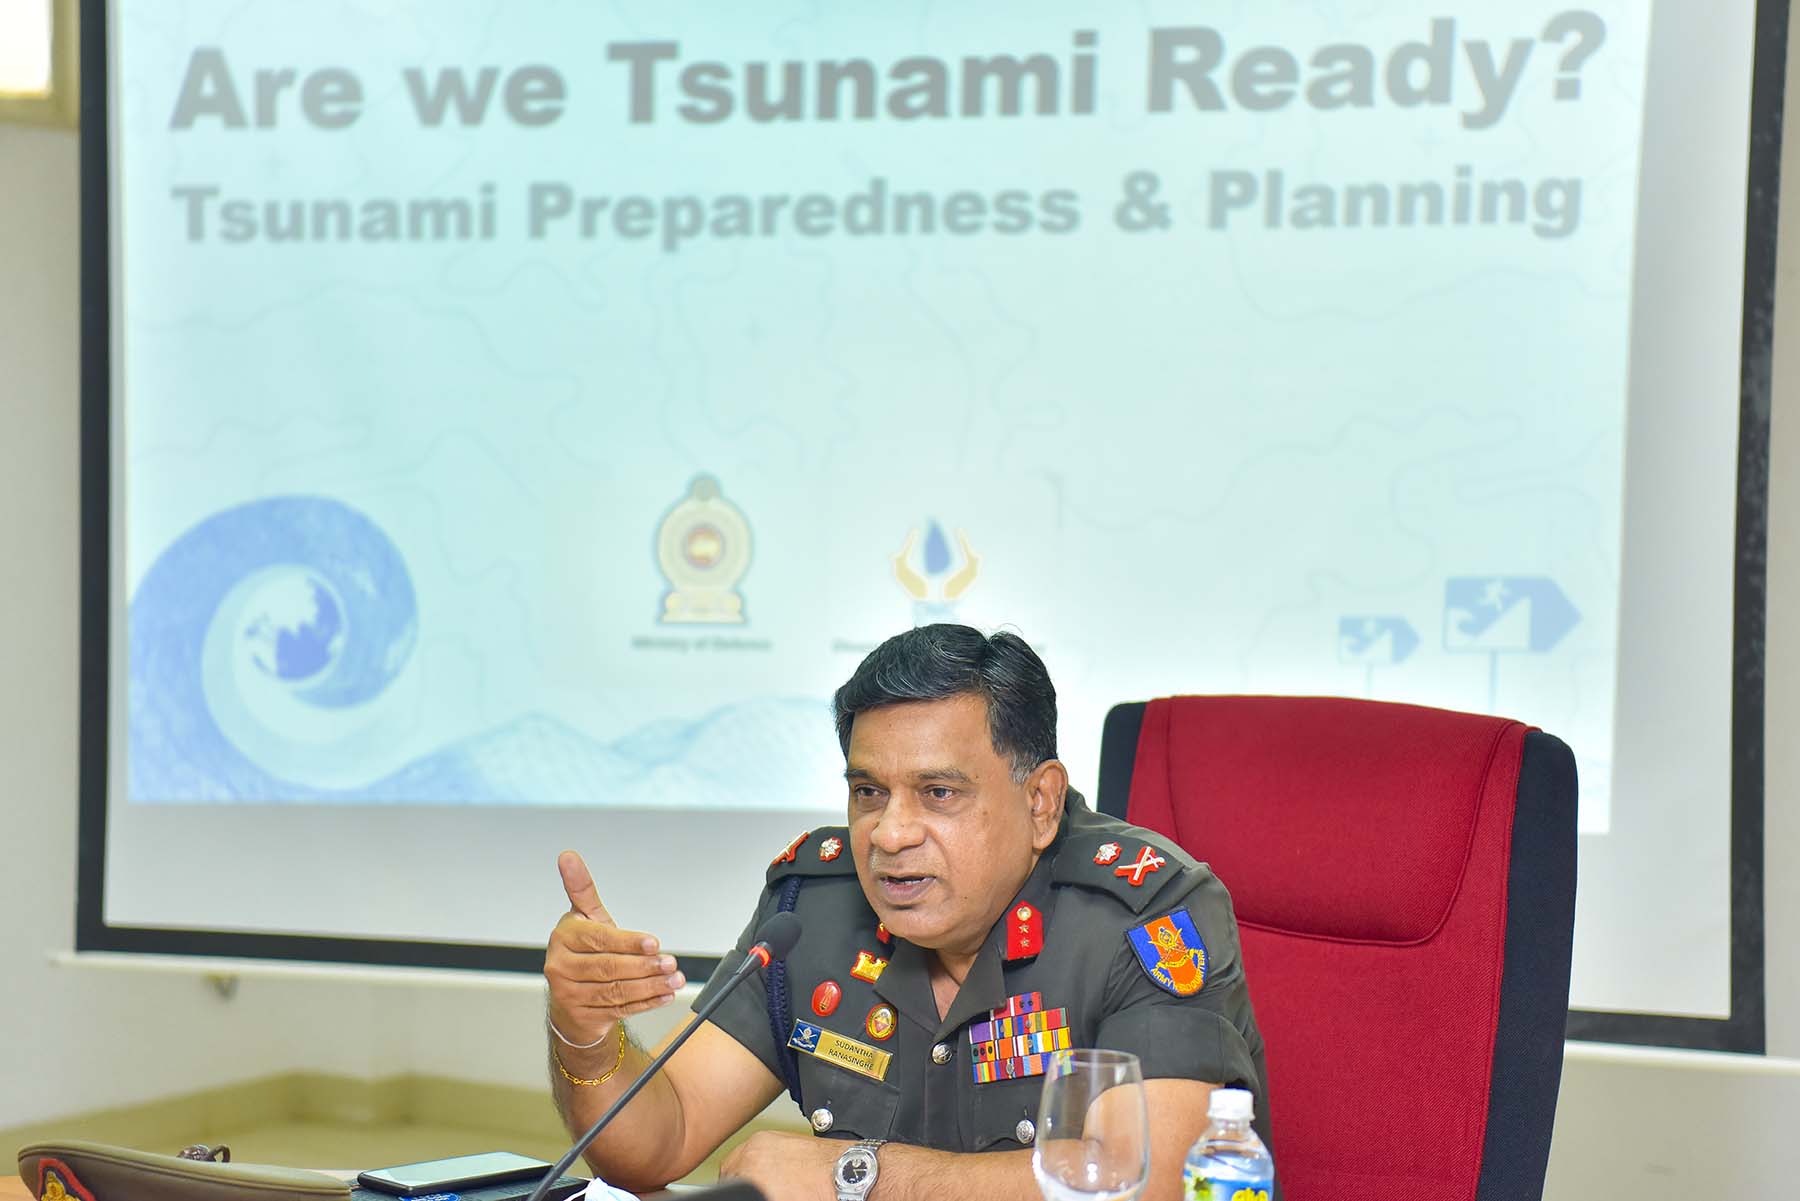 Tsunami Earlywarning meeting. 01-25 7